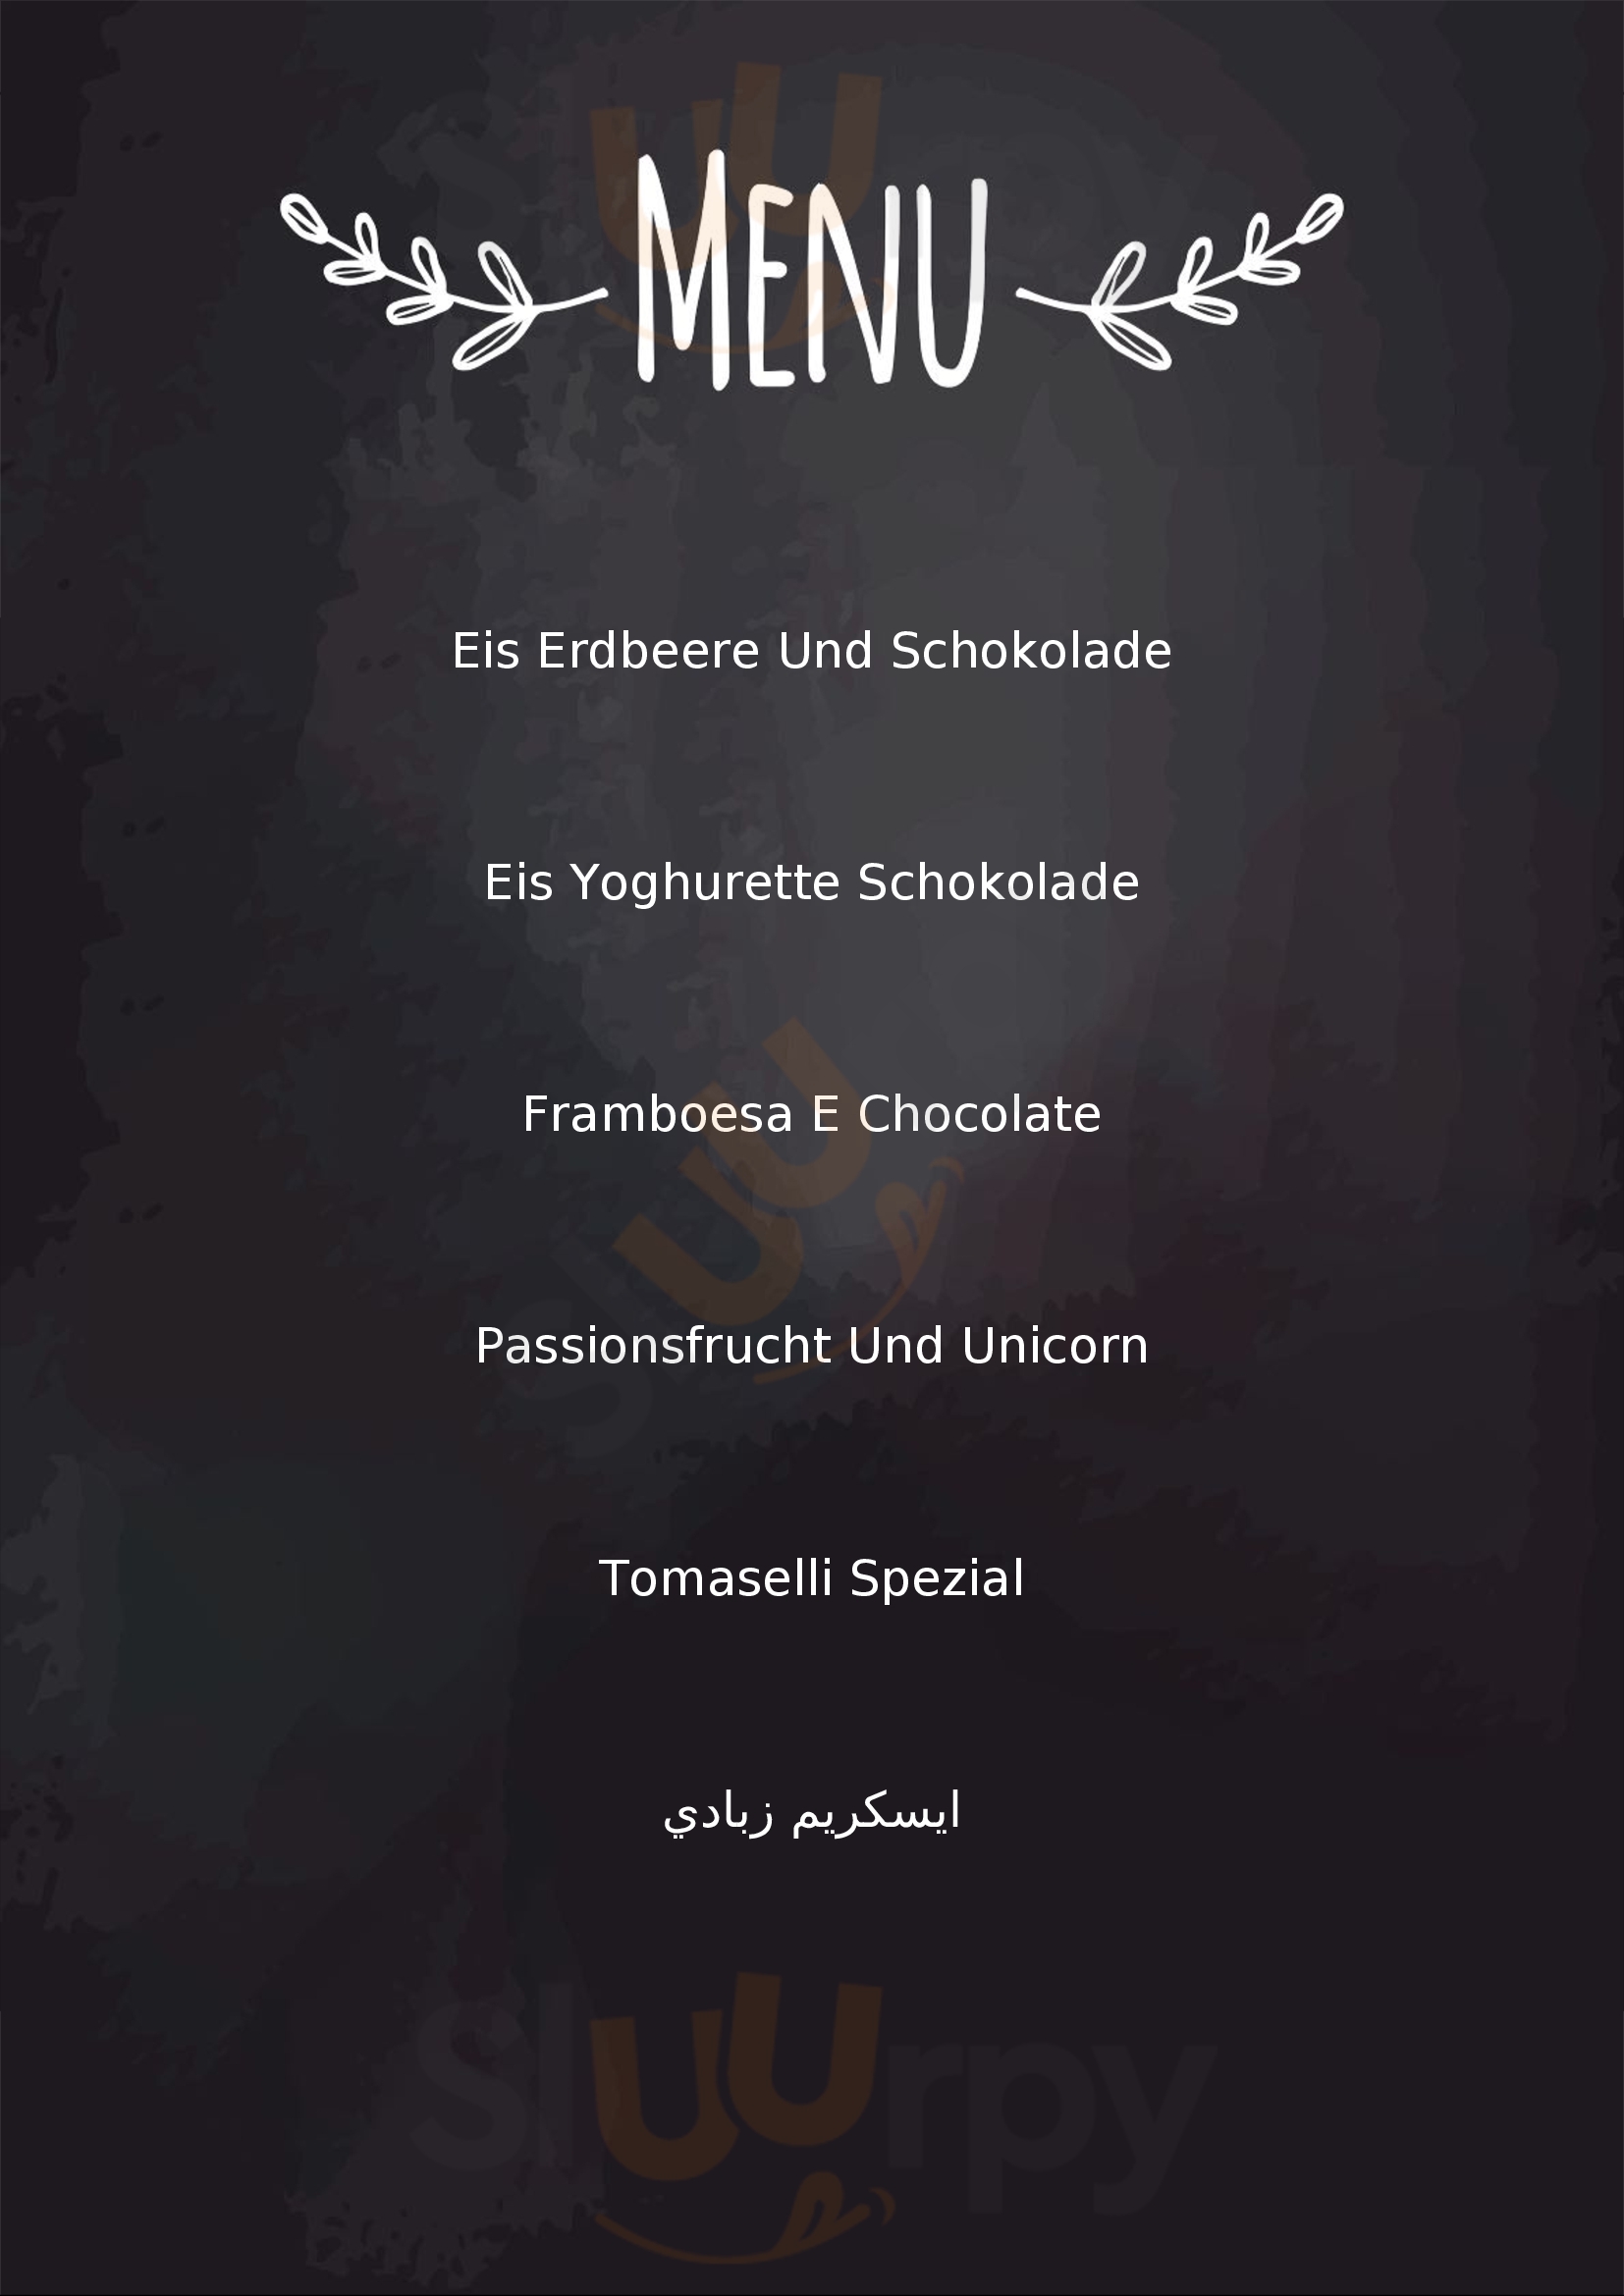 Gelateria Tomaselli Innsbruck Menu - 1